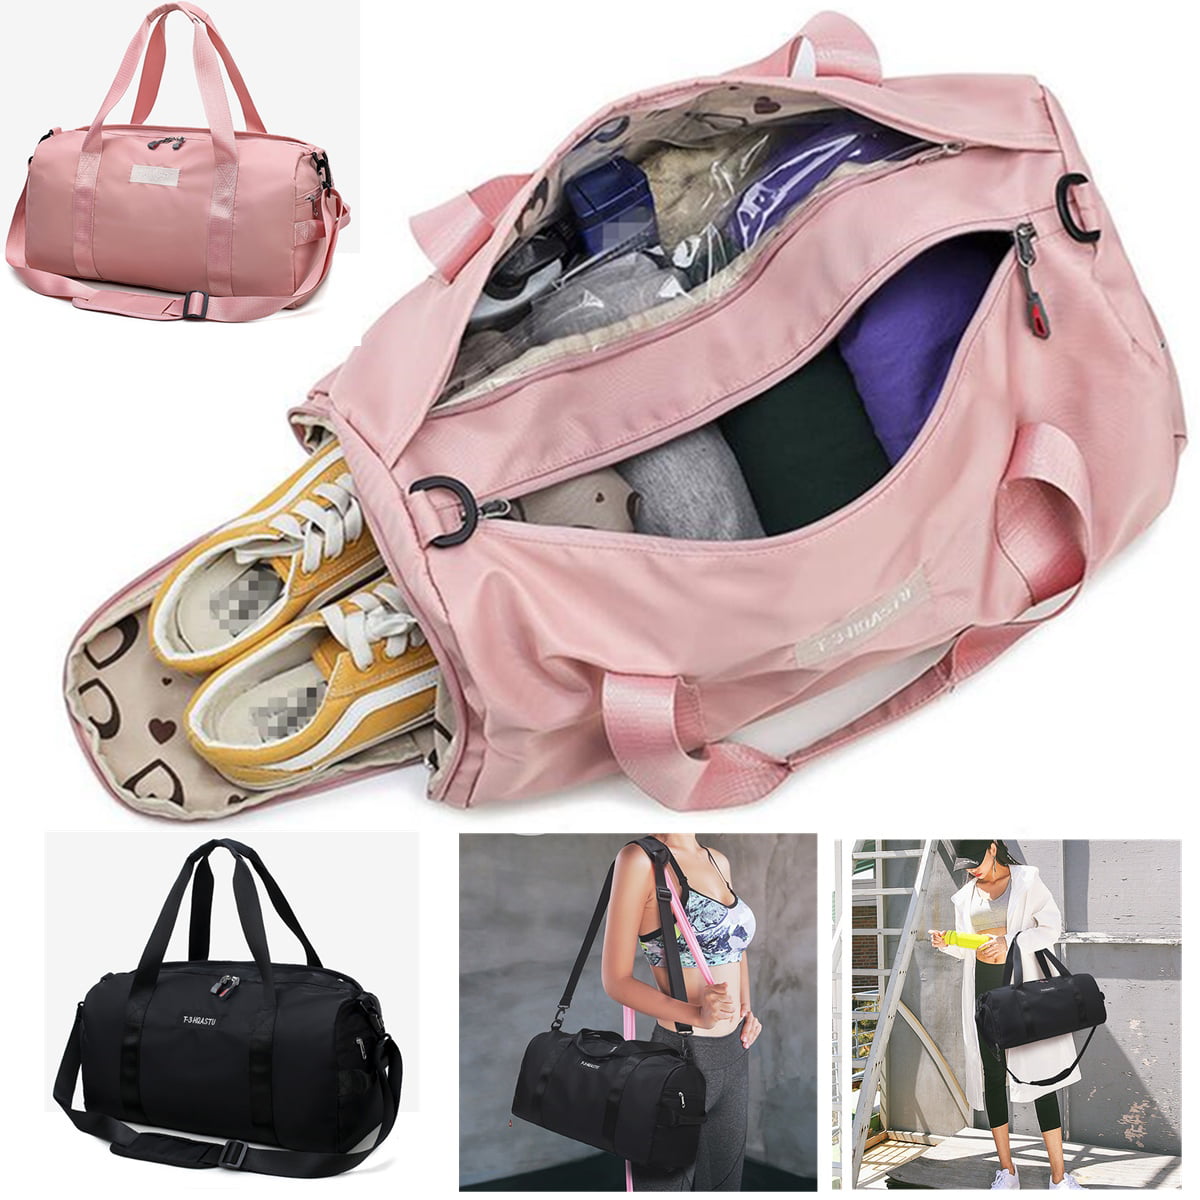 Women's Travel Hand Luggage Handbag Sports Gym Shoulder Bag Weekend Duffel Pack 